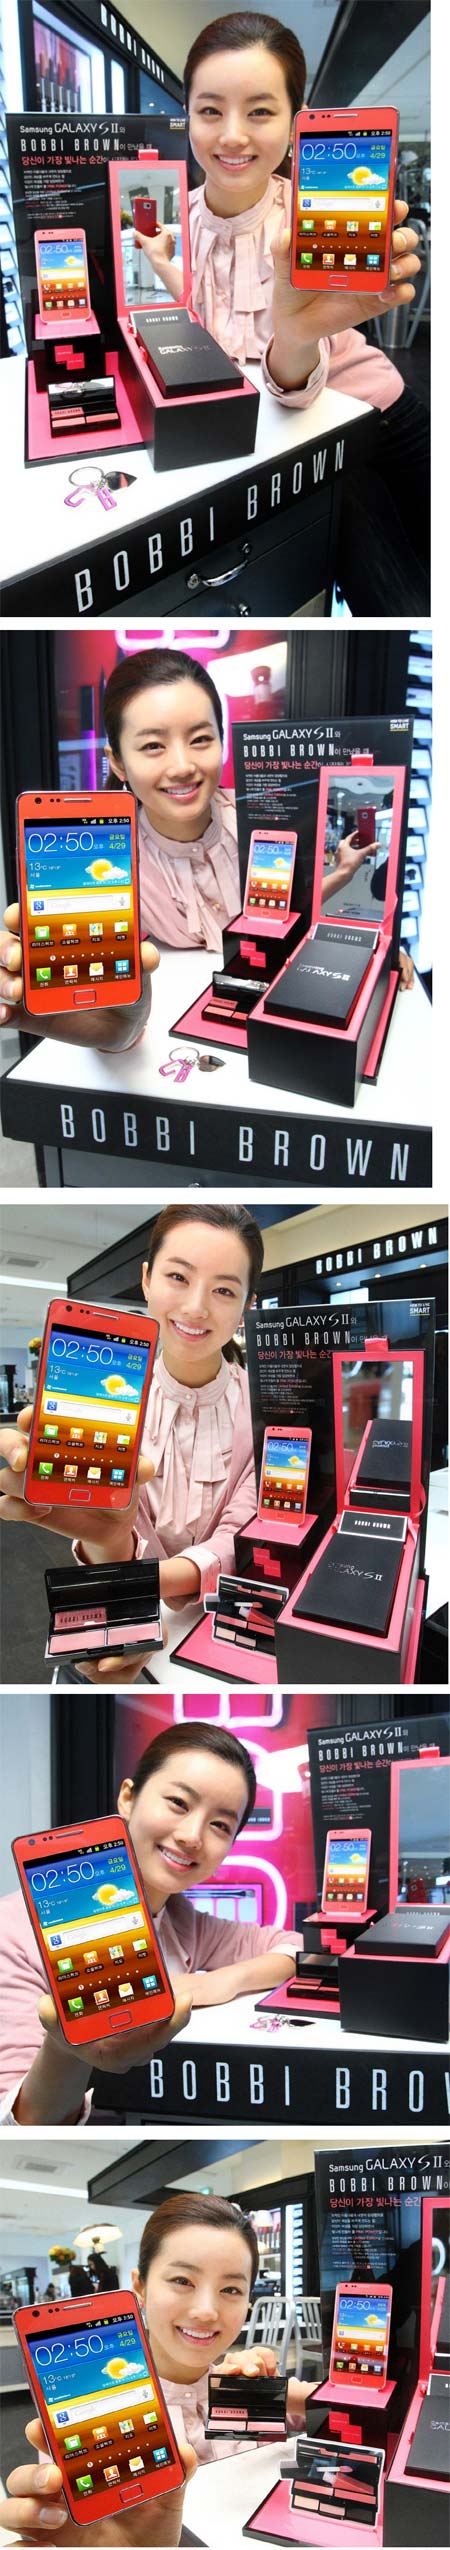 Смартфон Samsung Galaxy S II в редакции Bobbi Brown 